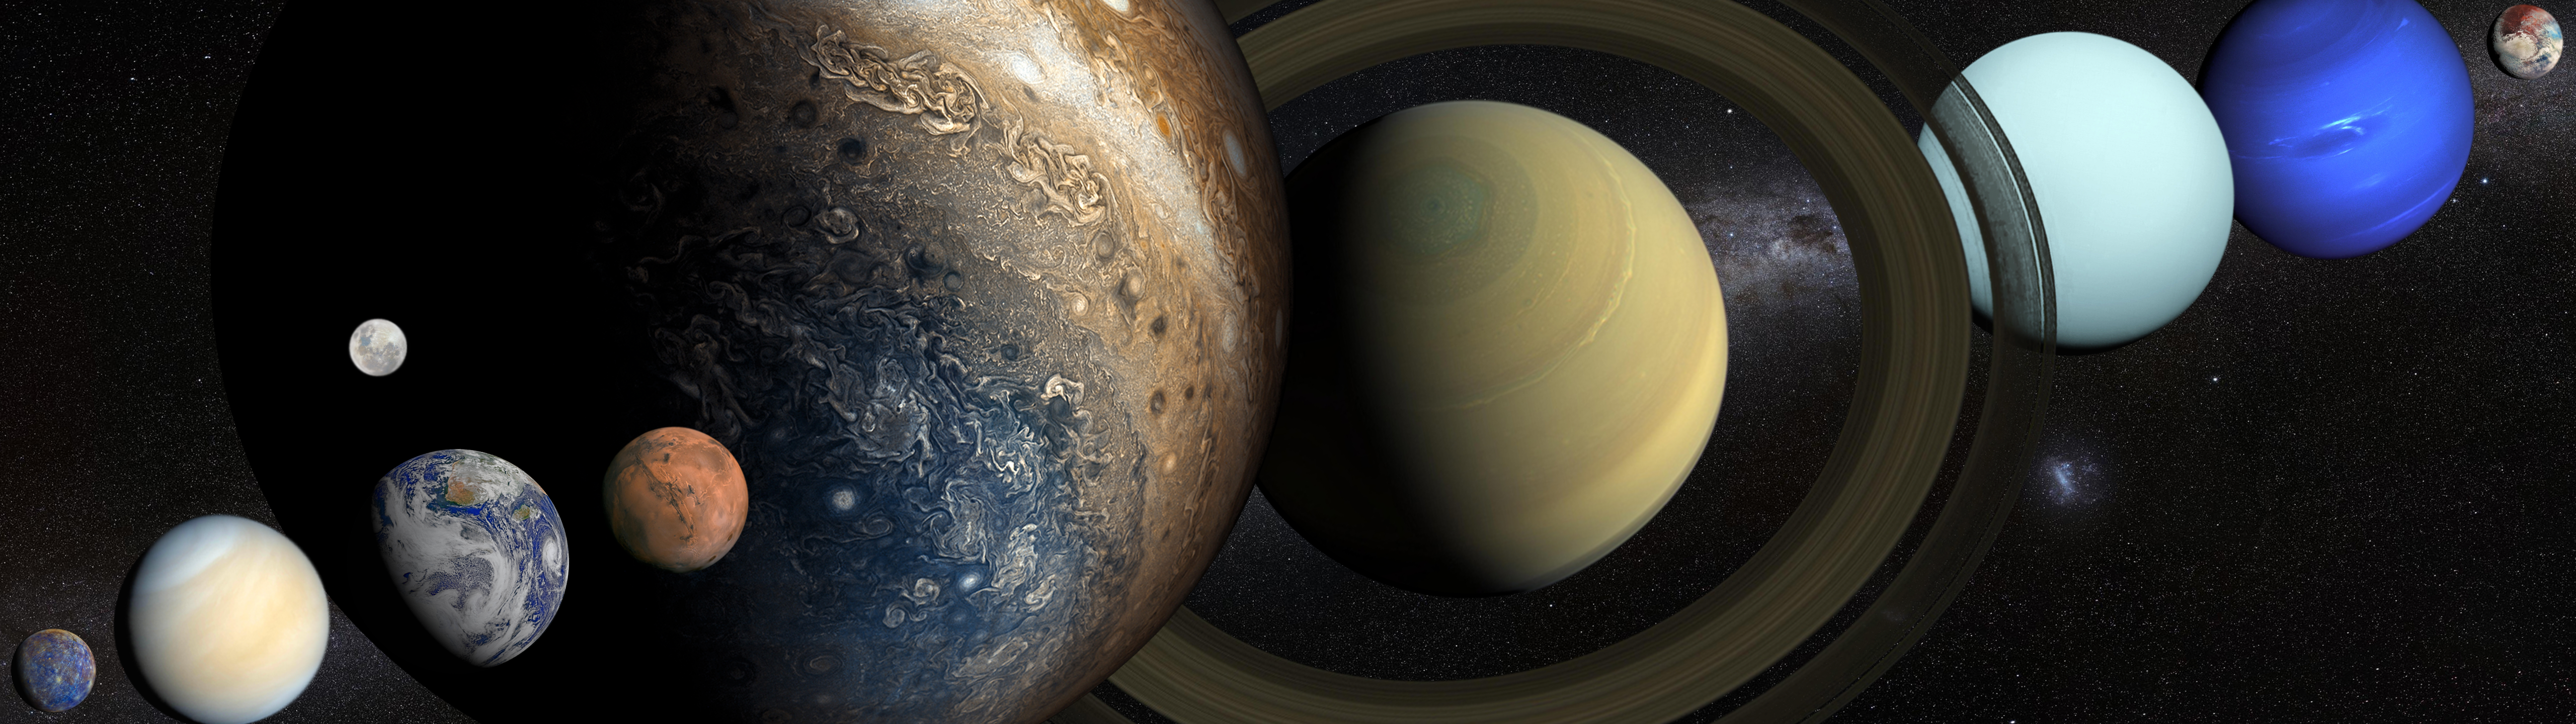 Solar System Venus Neptune Mercury Jupiter Saturn Uranus Earth Mars Pluto Milky Way Moon Space Wallpaper:5120x1440